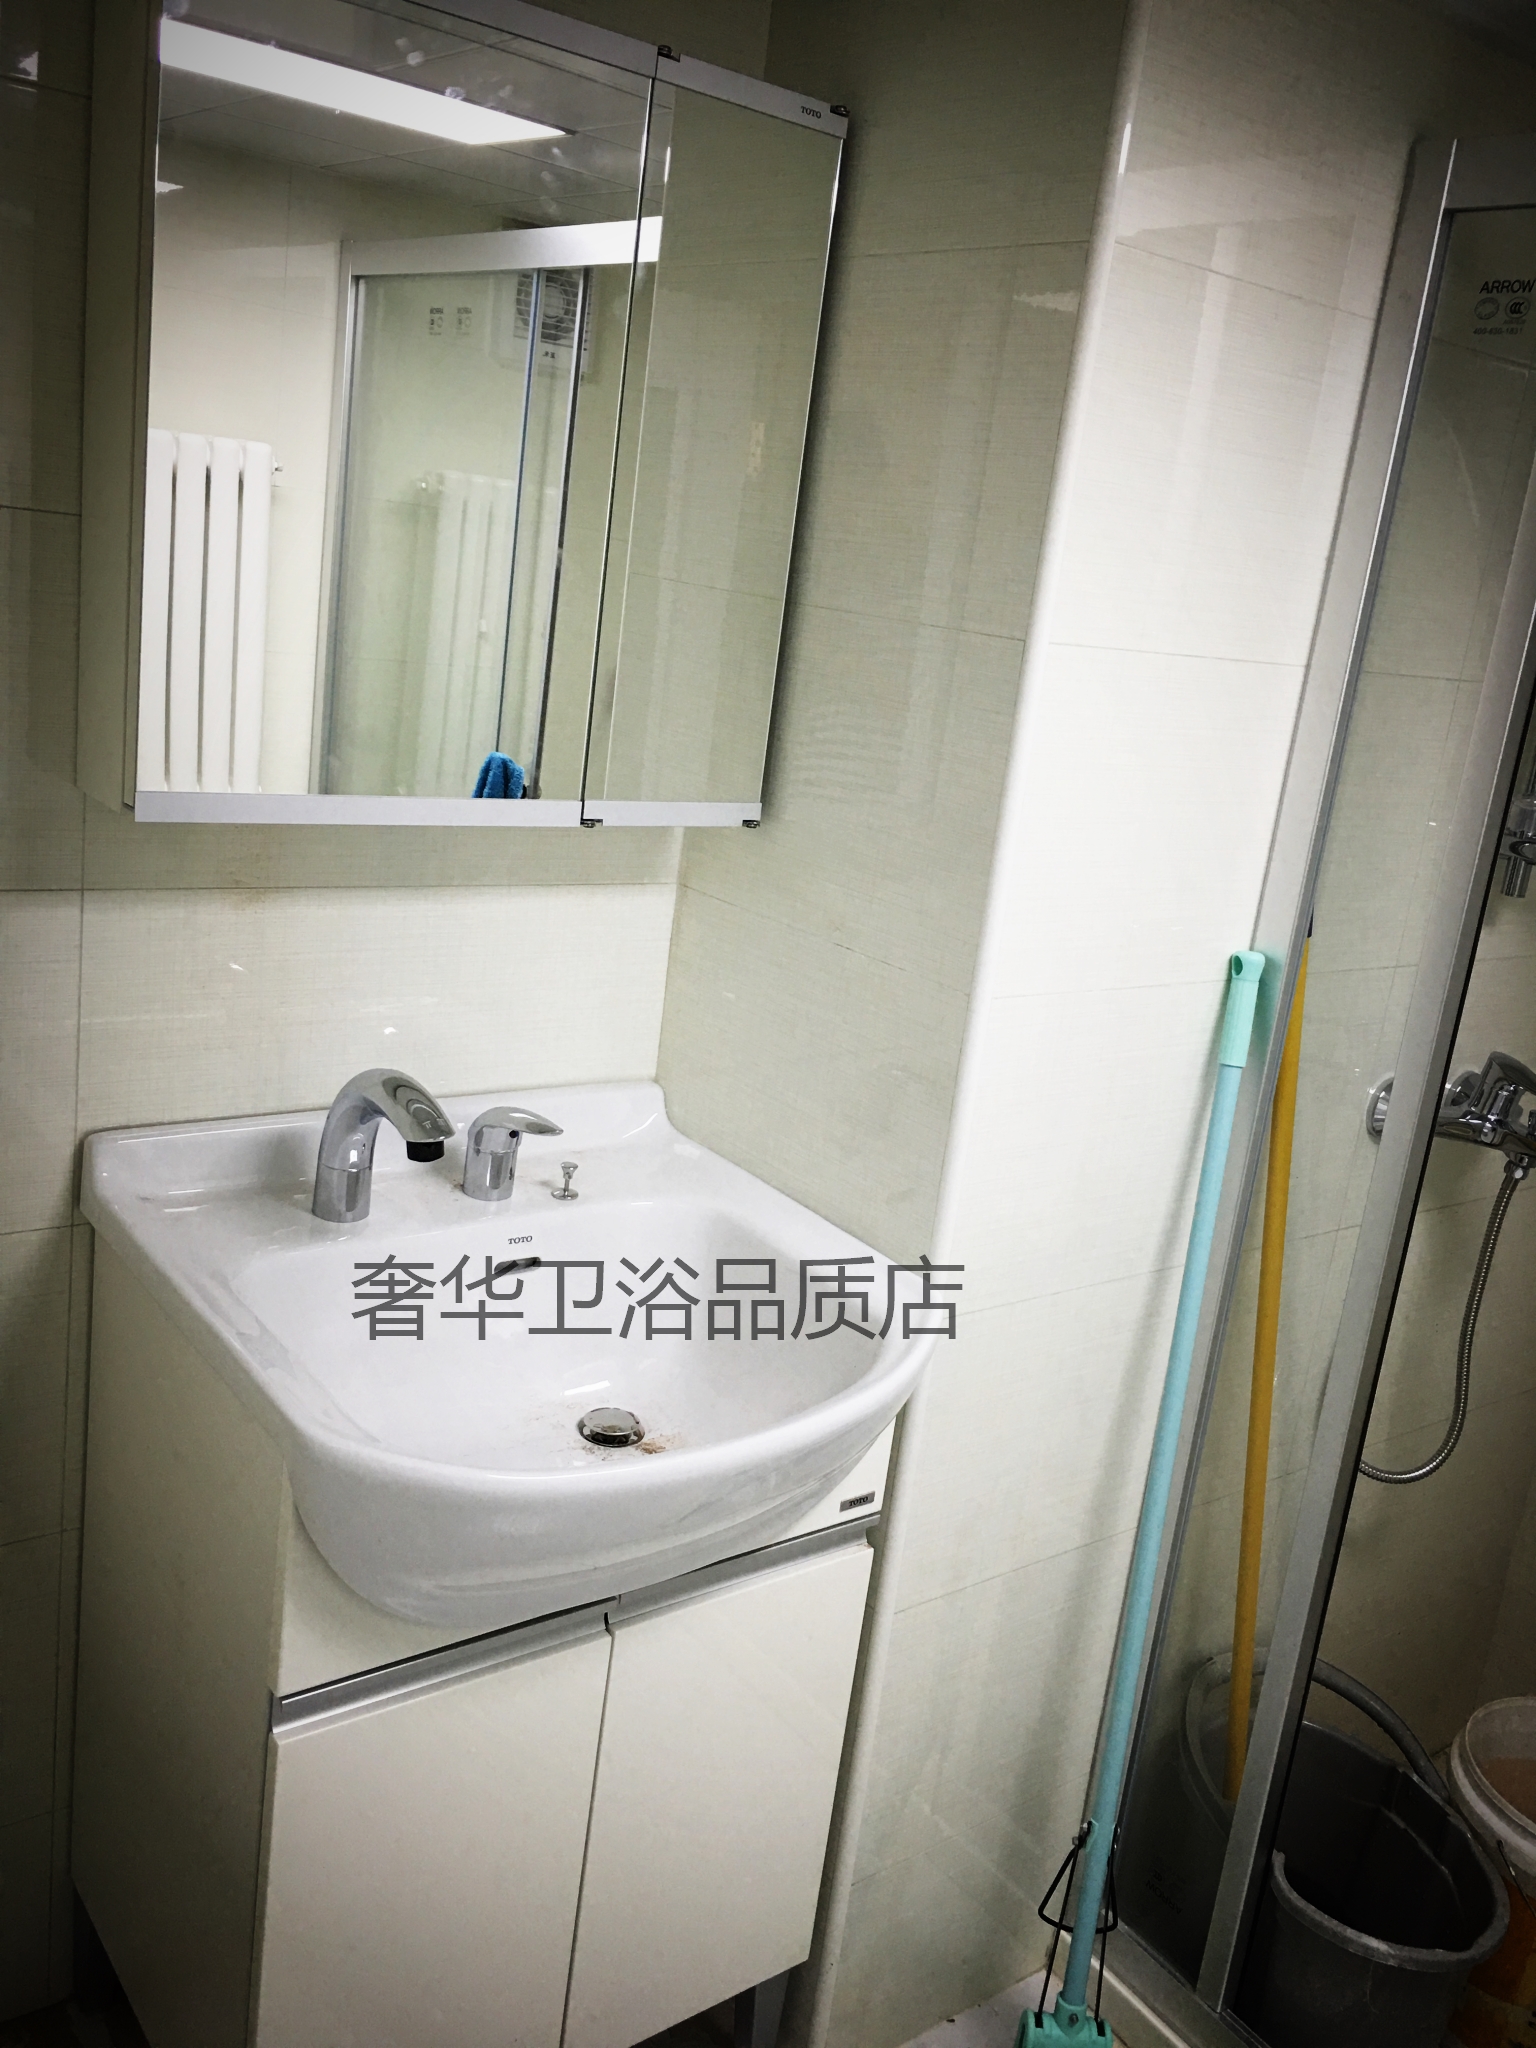 TOTO洁具品牌卫浴现代简约储物浴室柜组合镜柜C促销